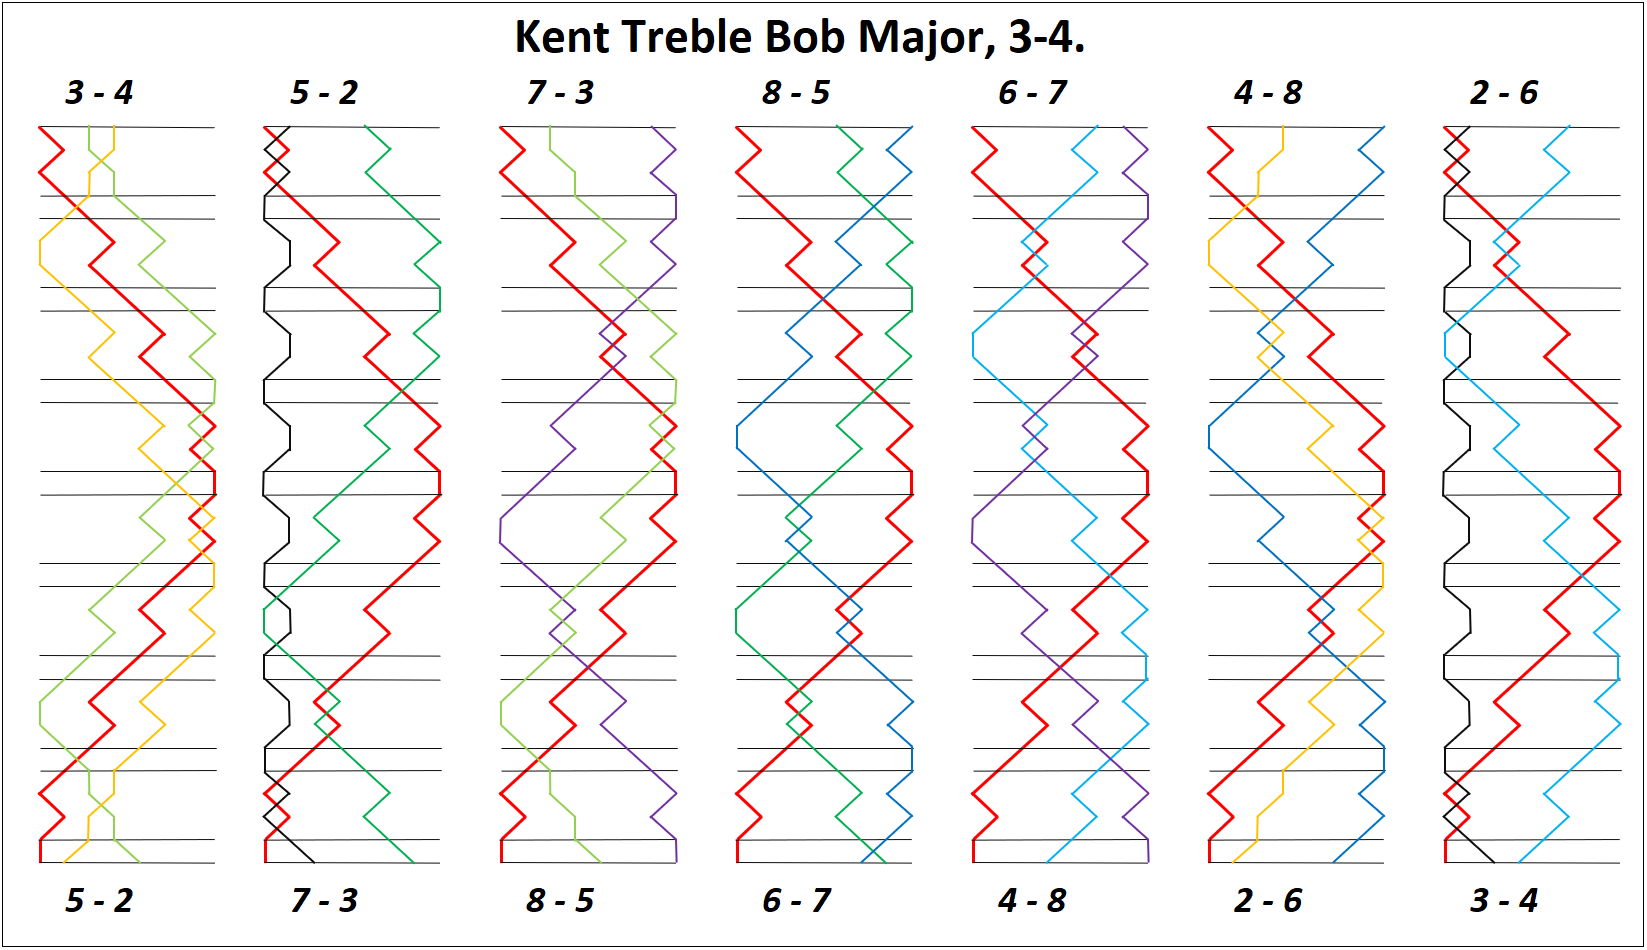 Kent Treble Bob Major Double line for 3-4